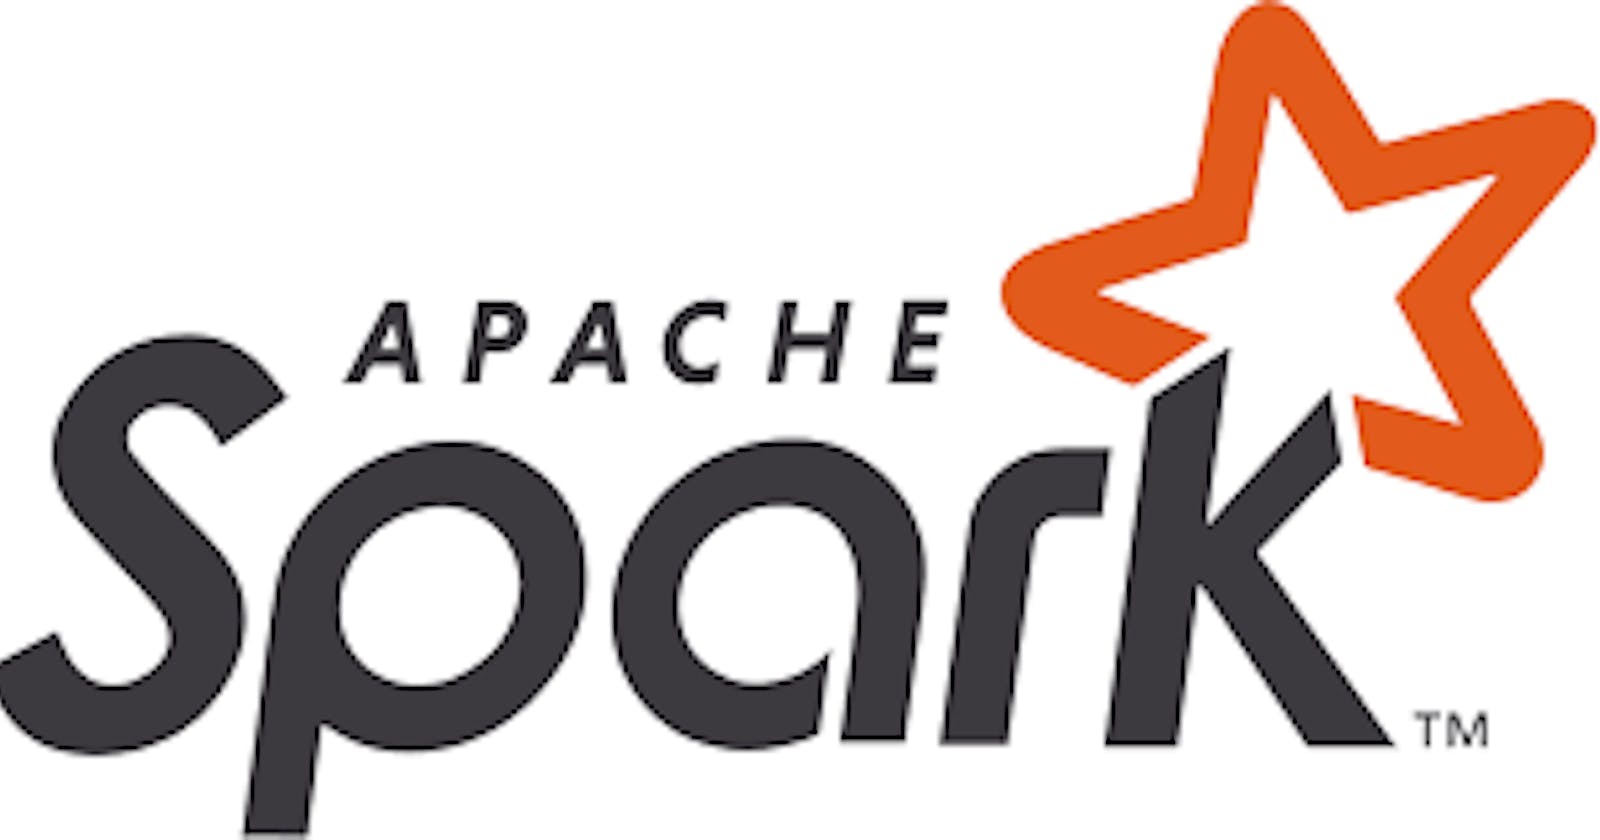 5 Apache Spark Use Cases